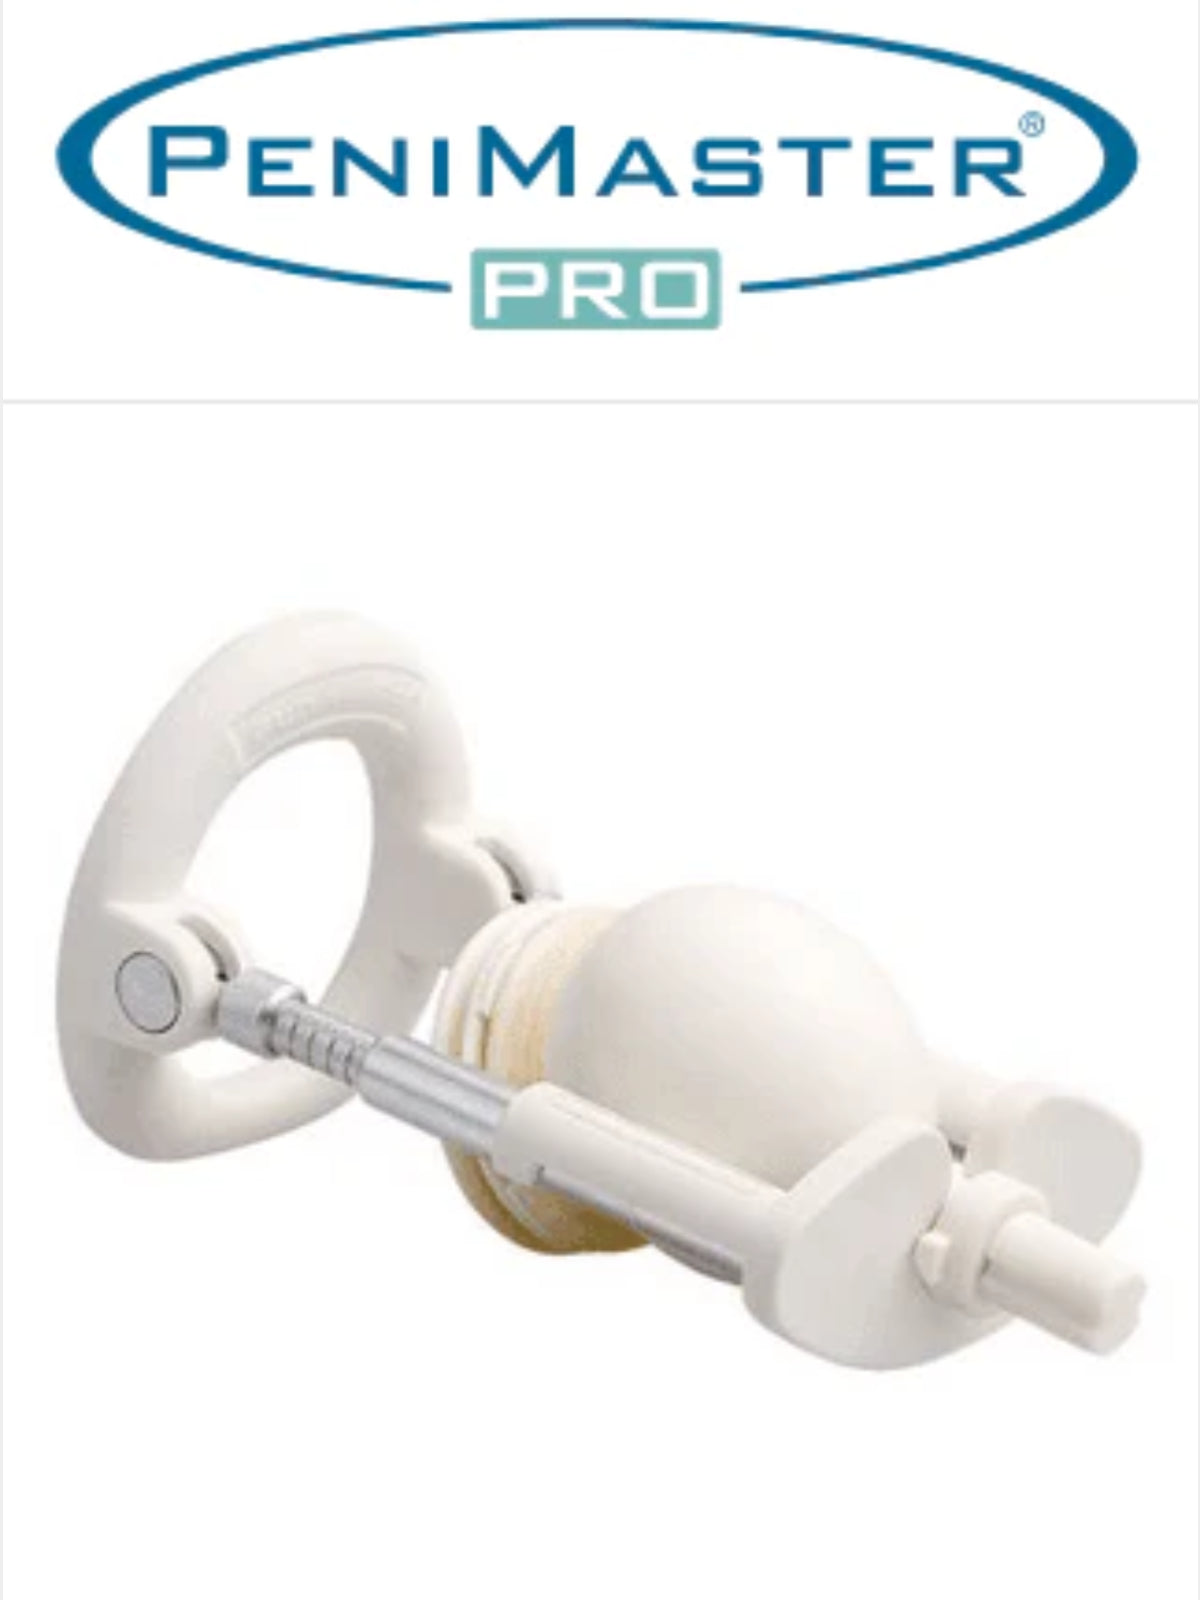 PeniMaster PRO - rod expander system